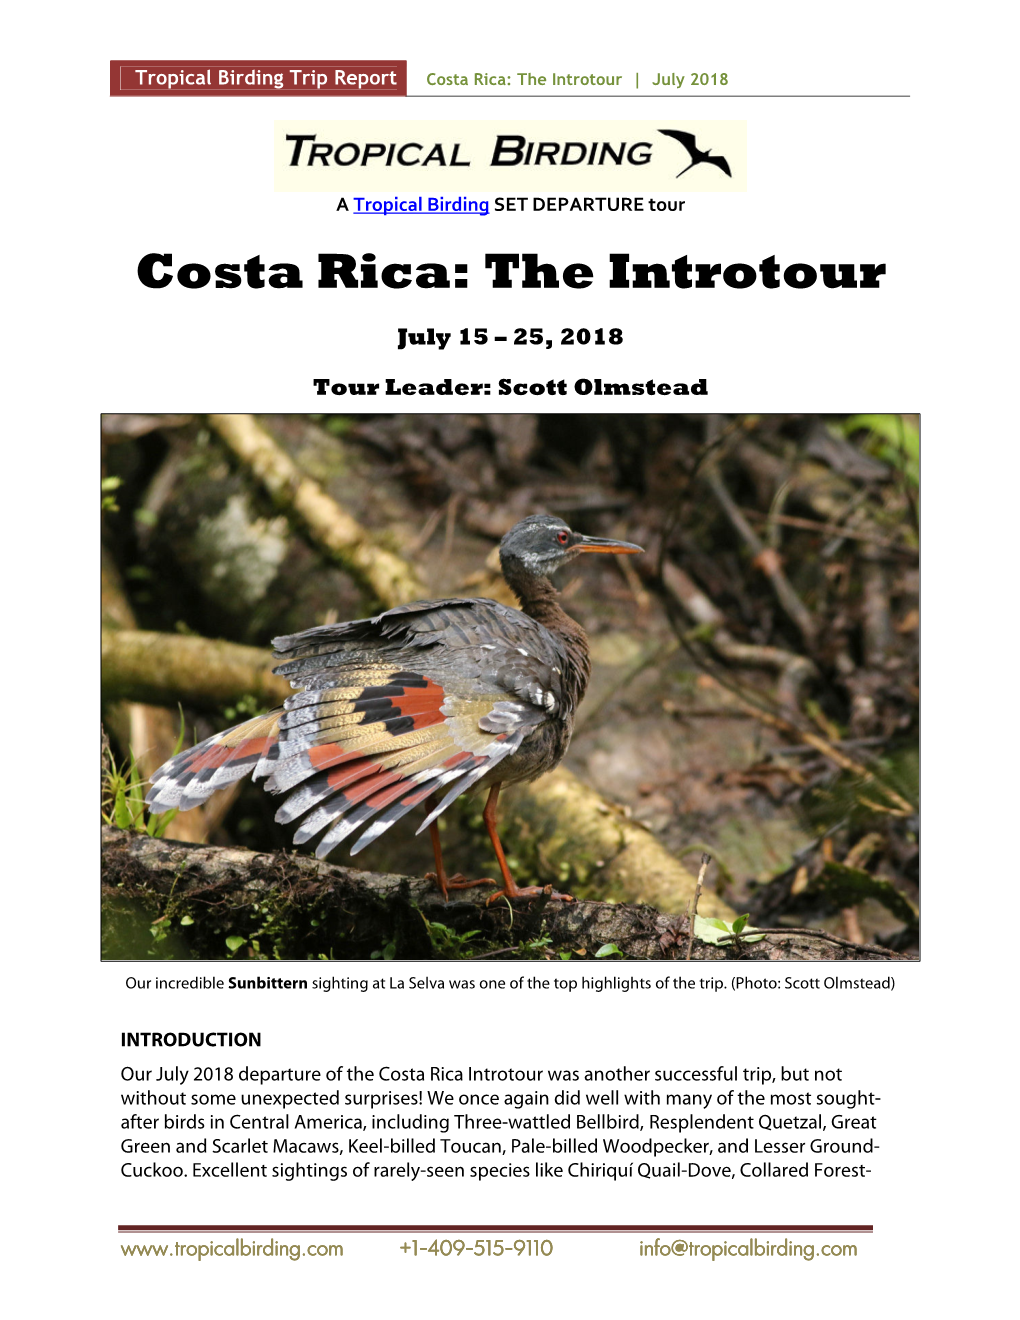 Costa Rica Introtour